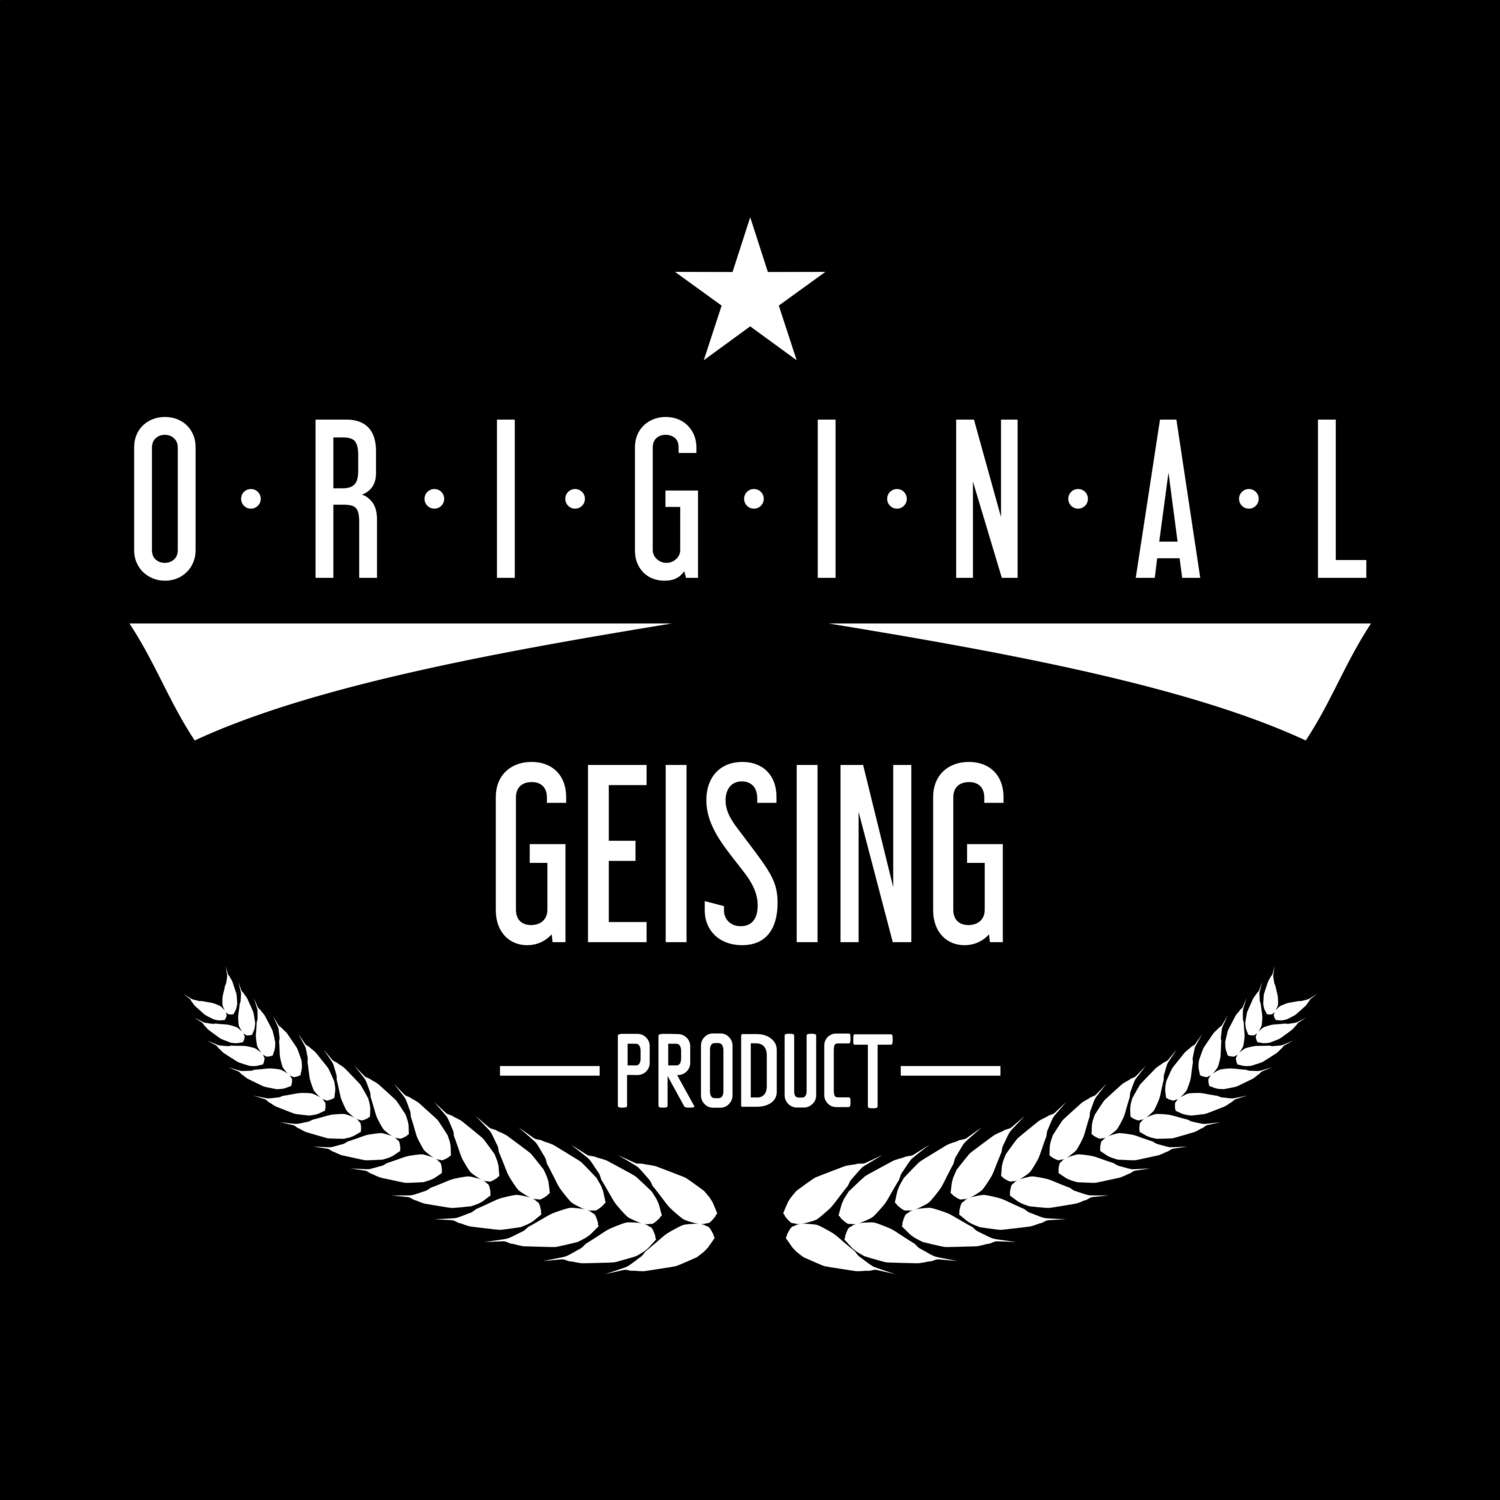 Geising T-Shirt »Original Product«